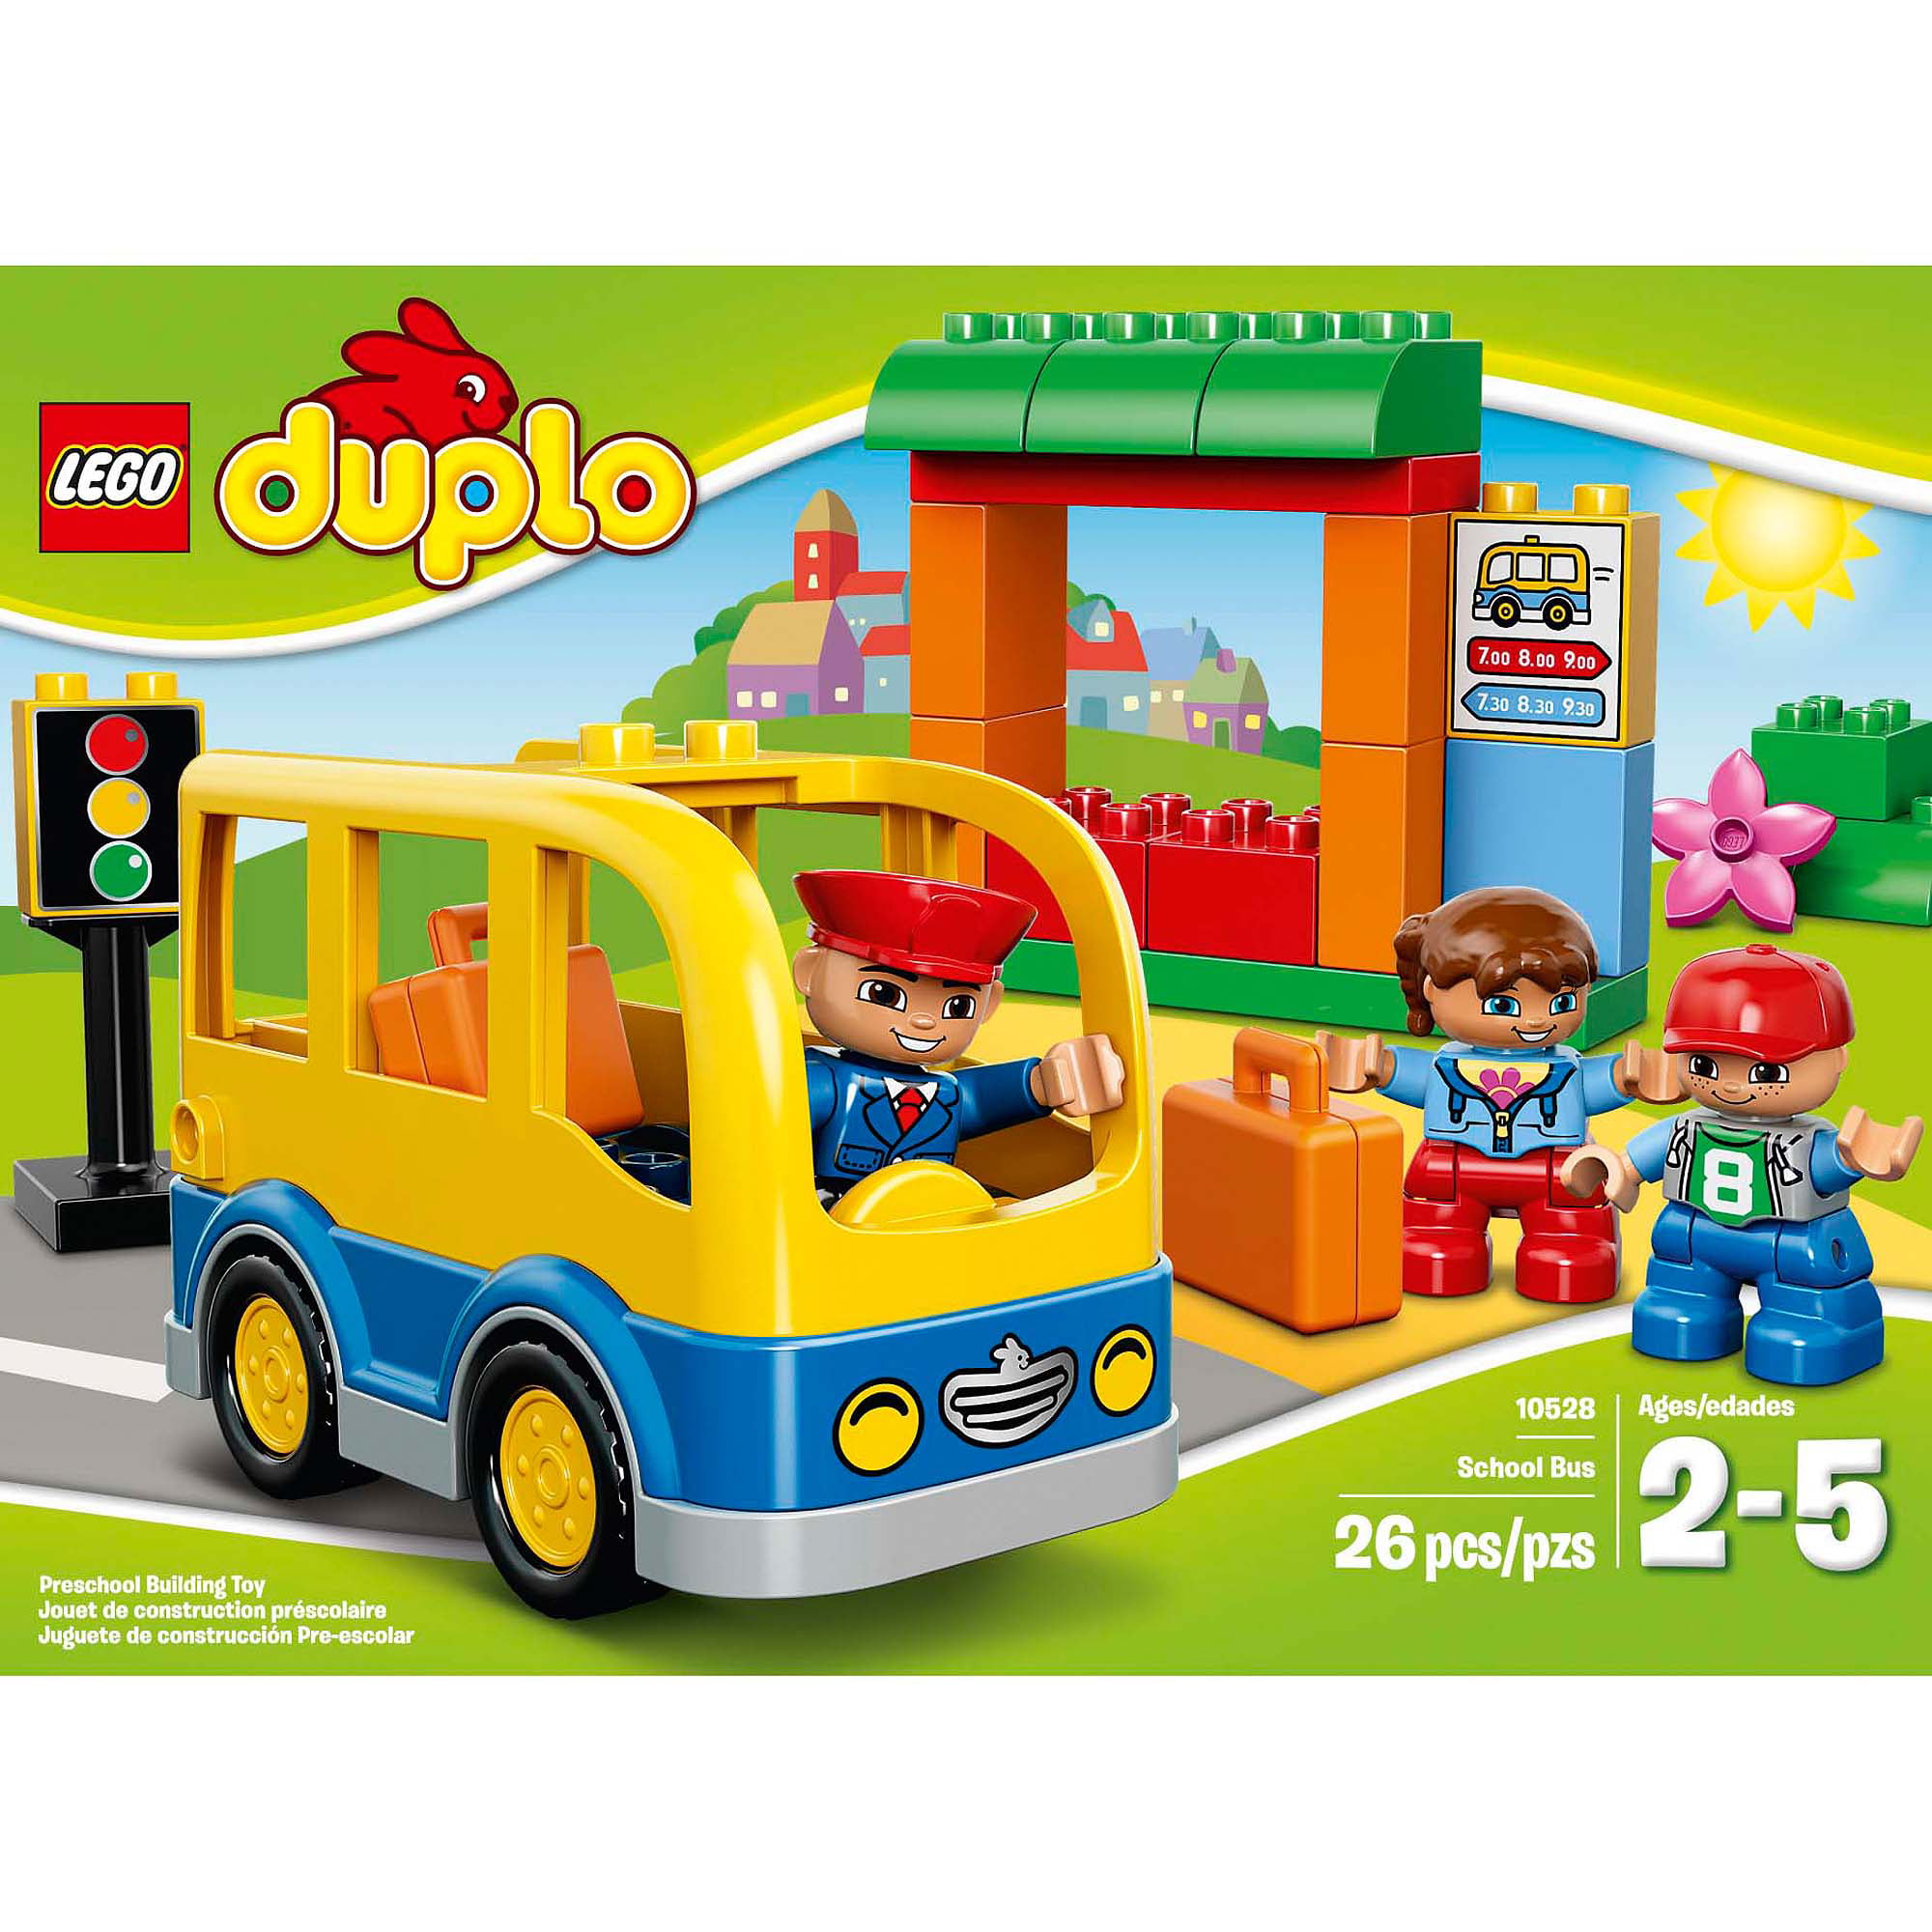 Vægt Ved daggry positur LEGO DUPLO Town School Bus - Walmart.com